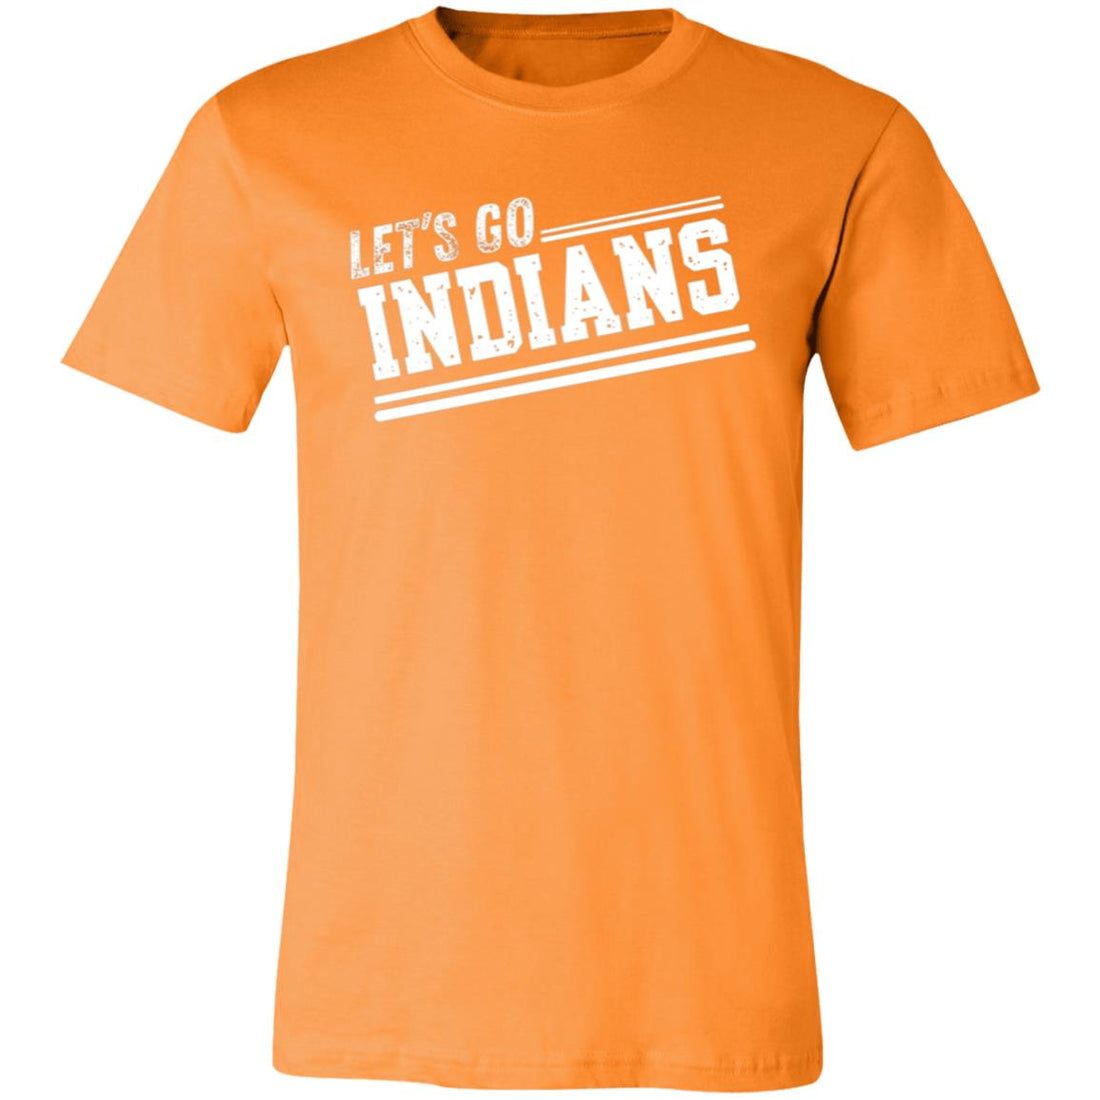 Let's Go Indians T - Shirt - T - Shirts - Positively Sassy - Let's Go Indians T - Shirt